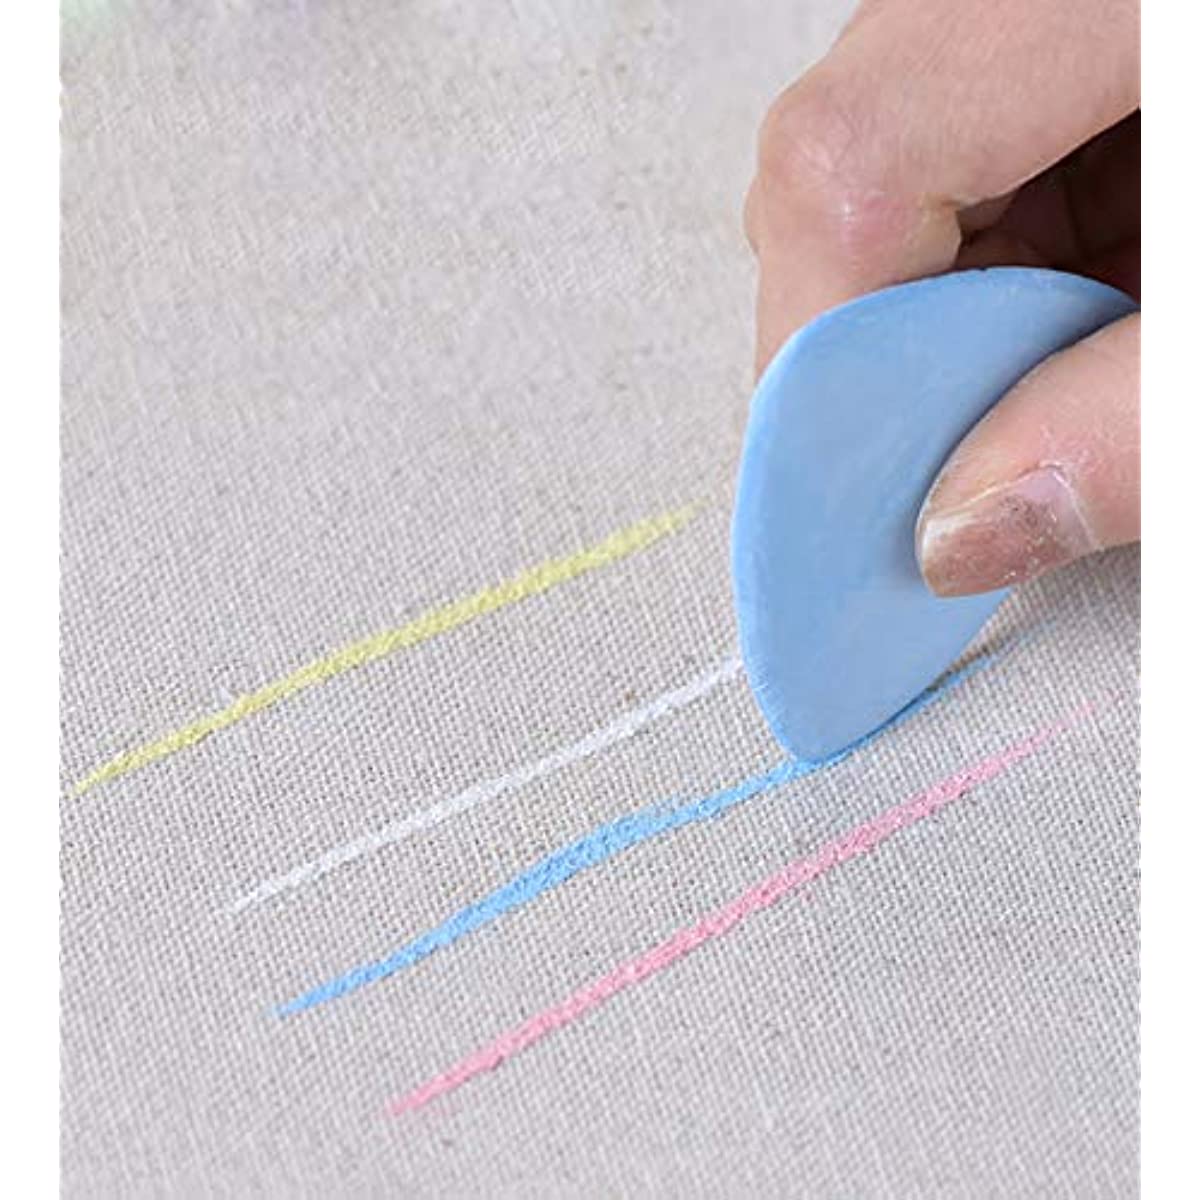 10 Pieces Tailor's Chalks, Erasable Fabric Tailors Marking Chalk